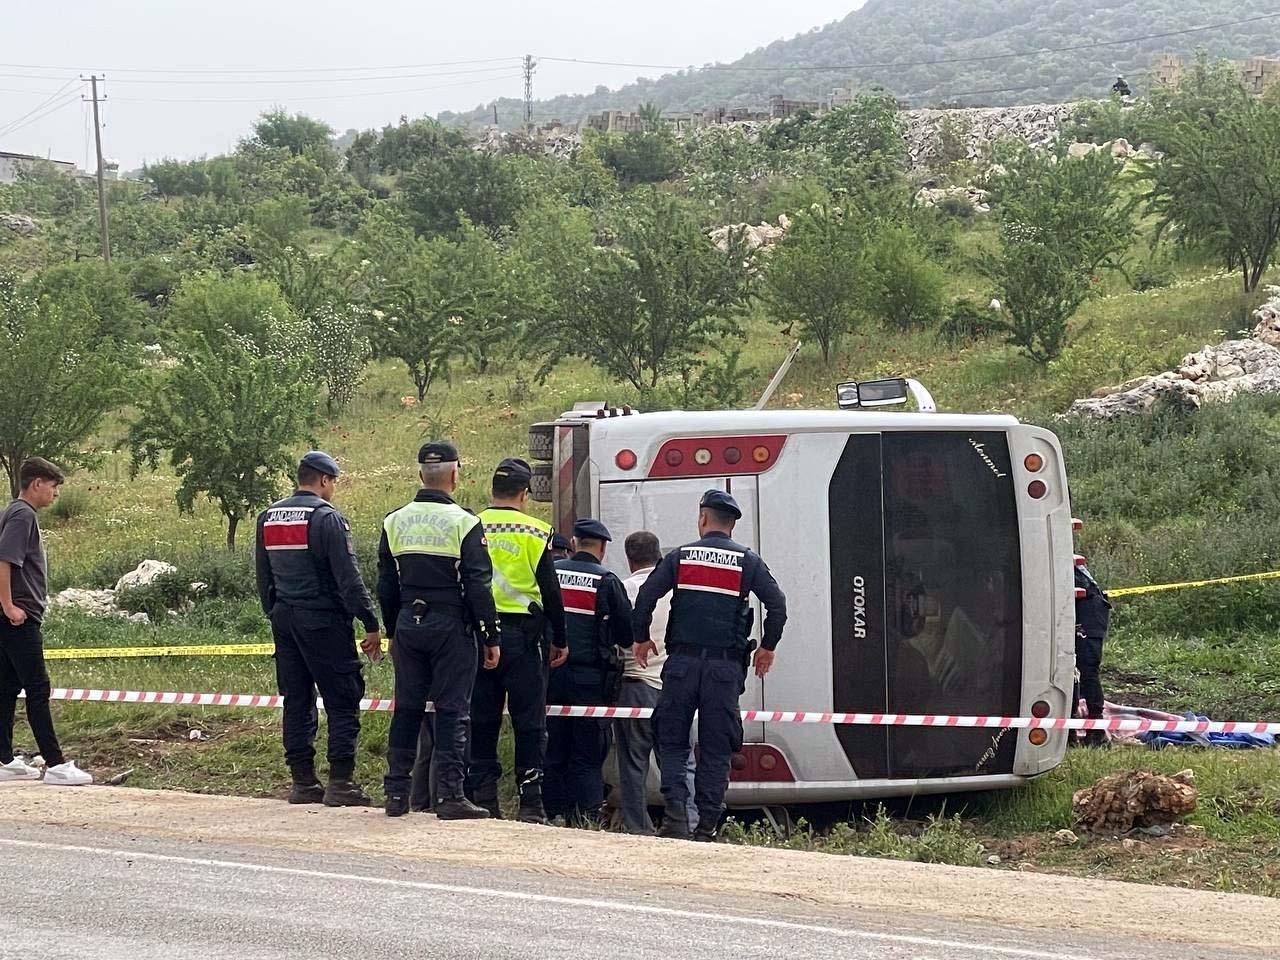 yolcu midibüsü devrildi: astsubay hayatını kaybetti, 17 yaralı